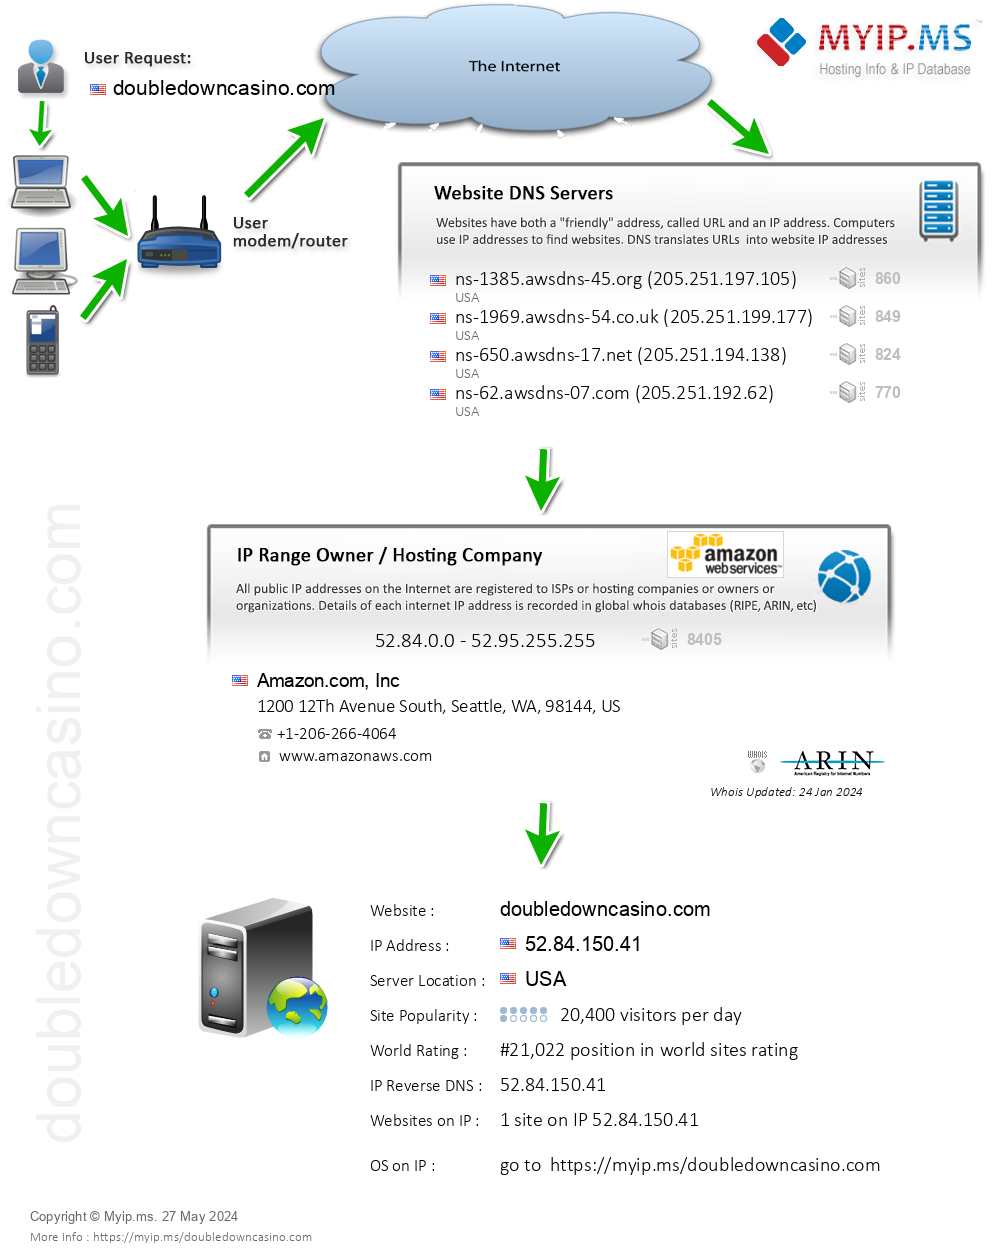 Doubledowncasino.com - Website Hosting Visual IP Diagram